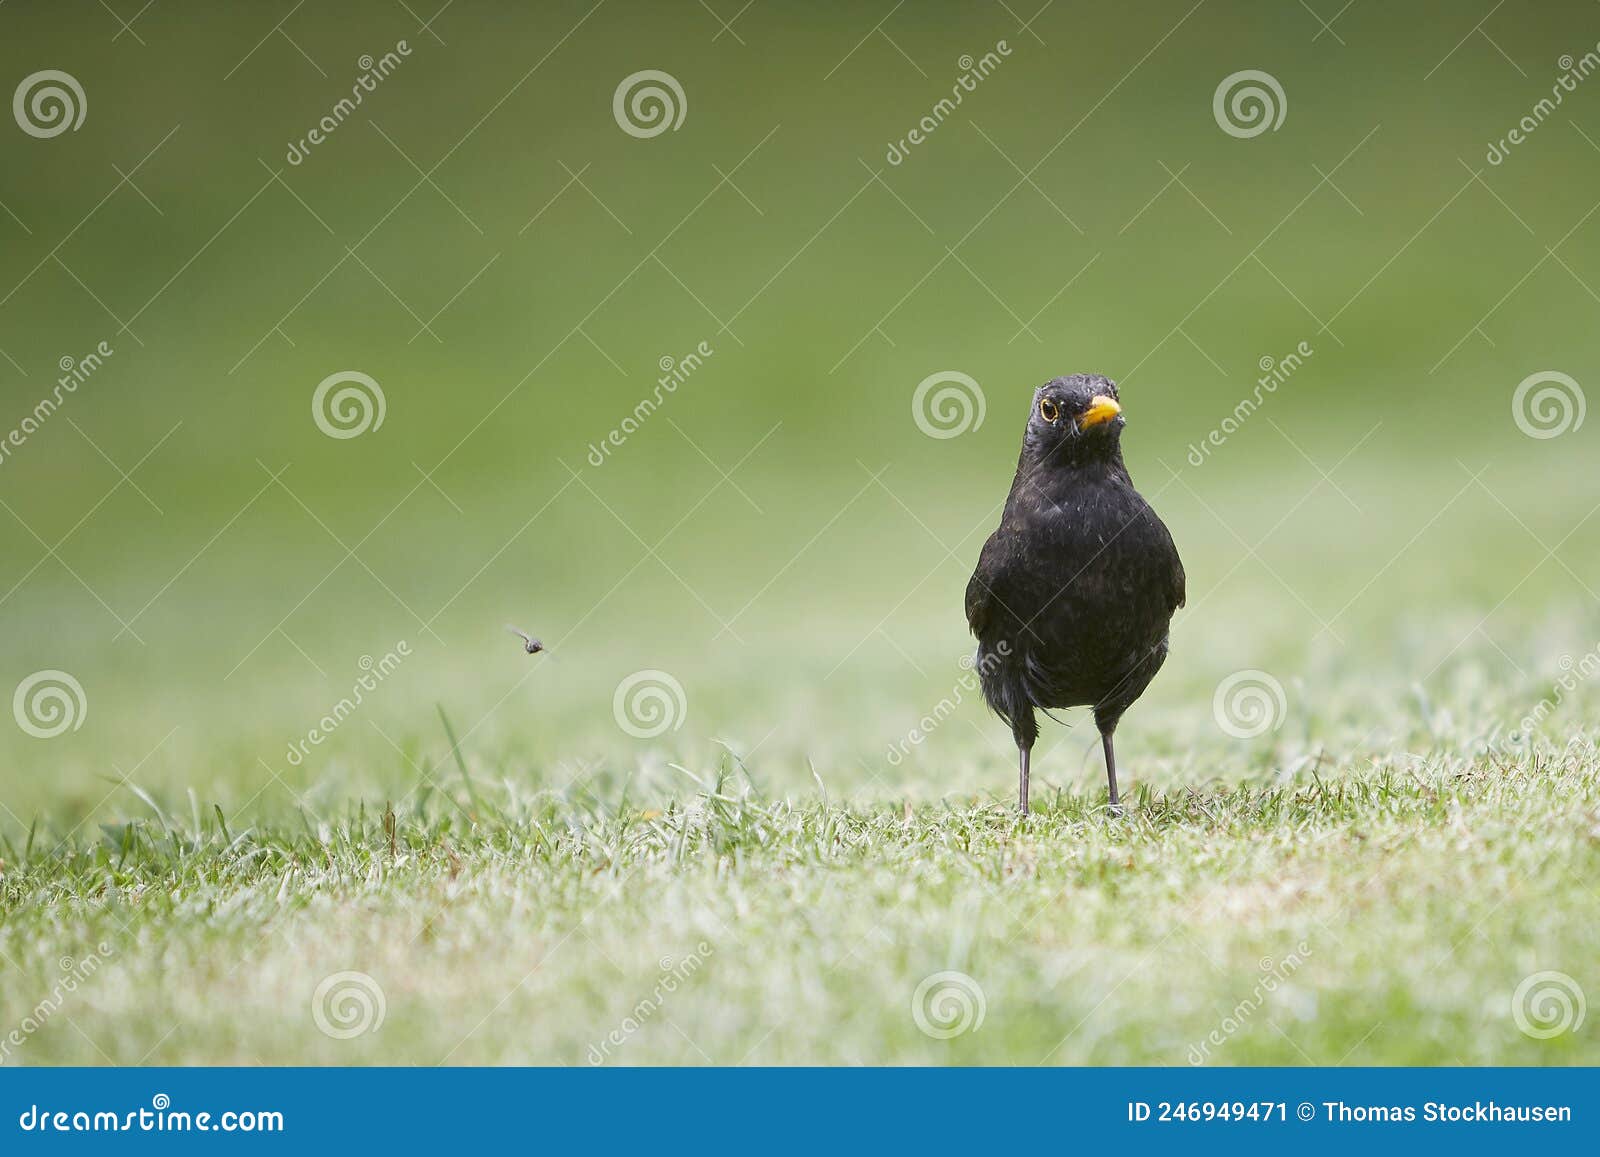 blackbird standing in green grass, turdidae